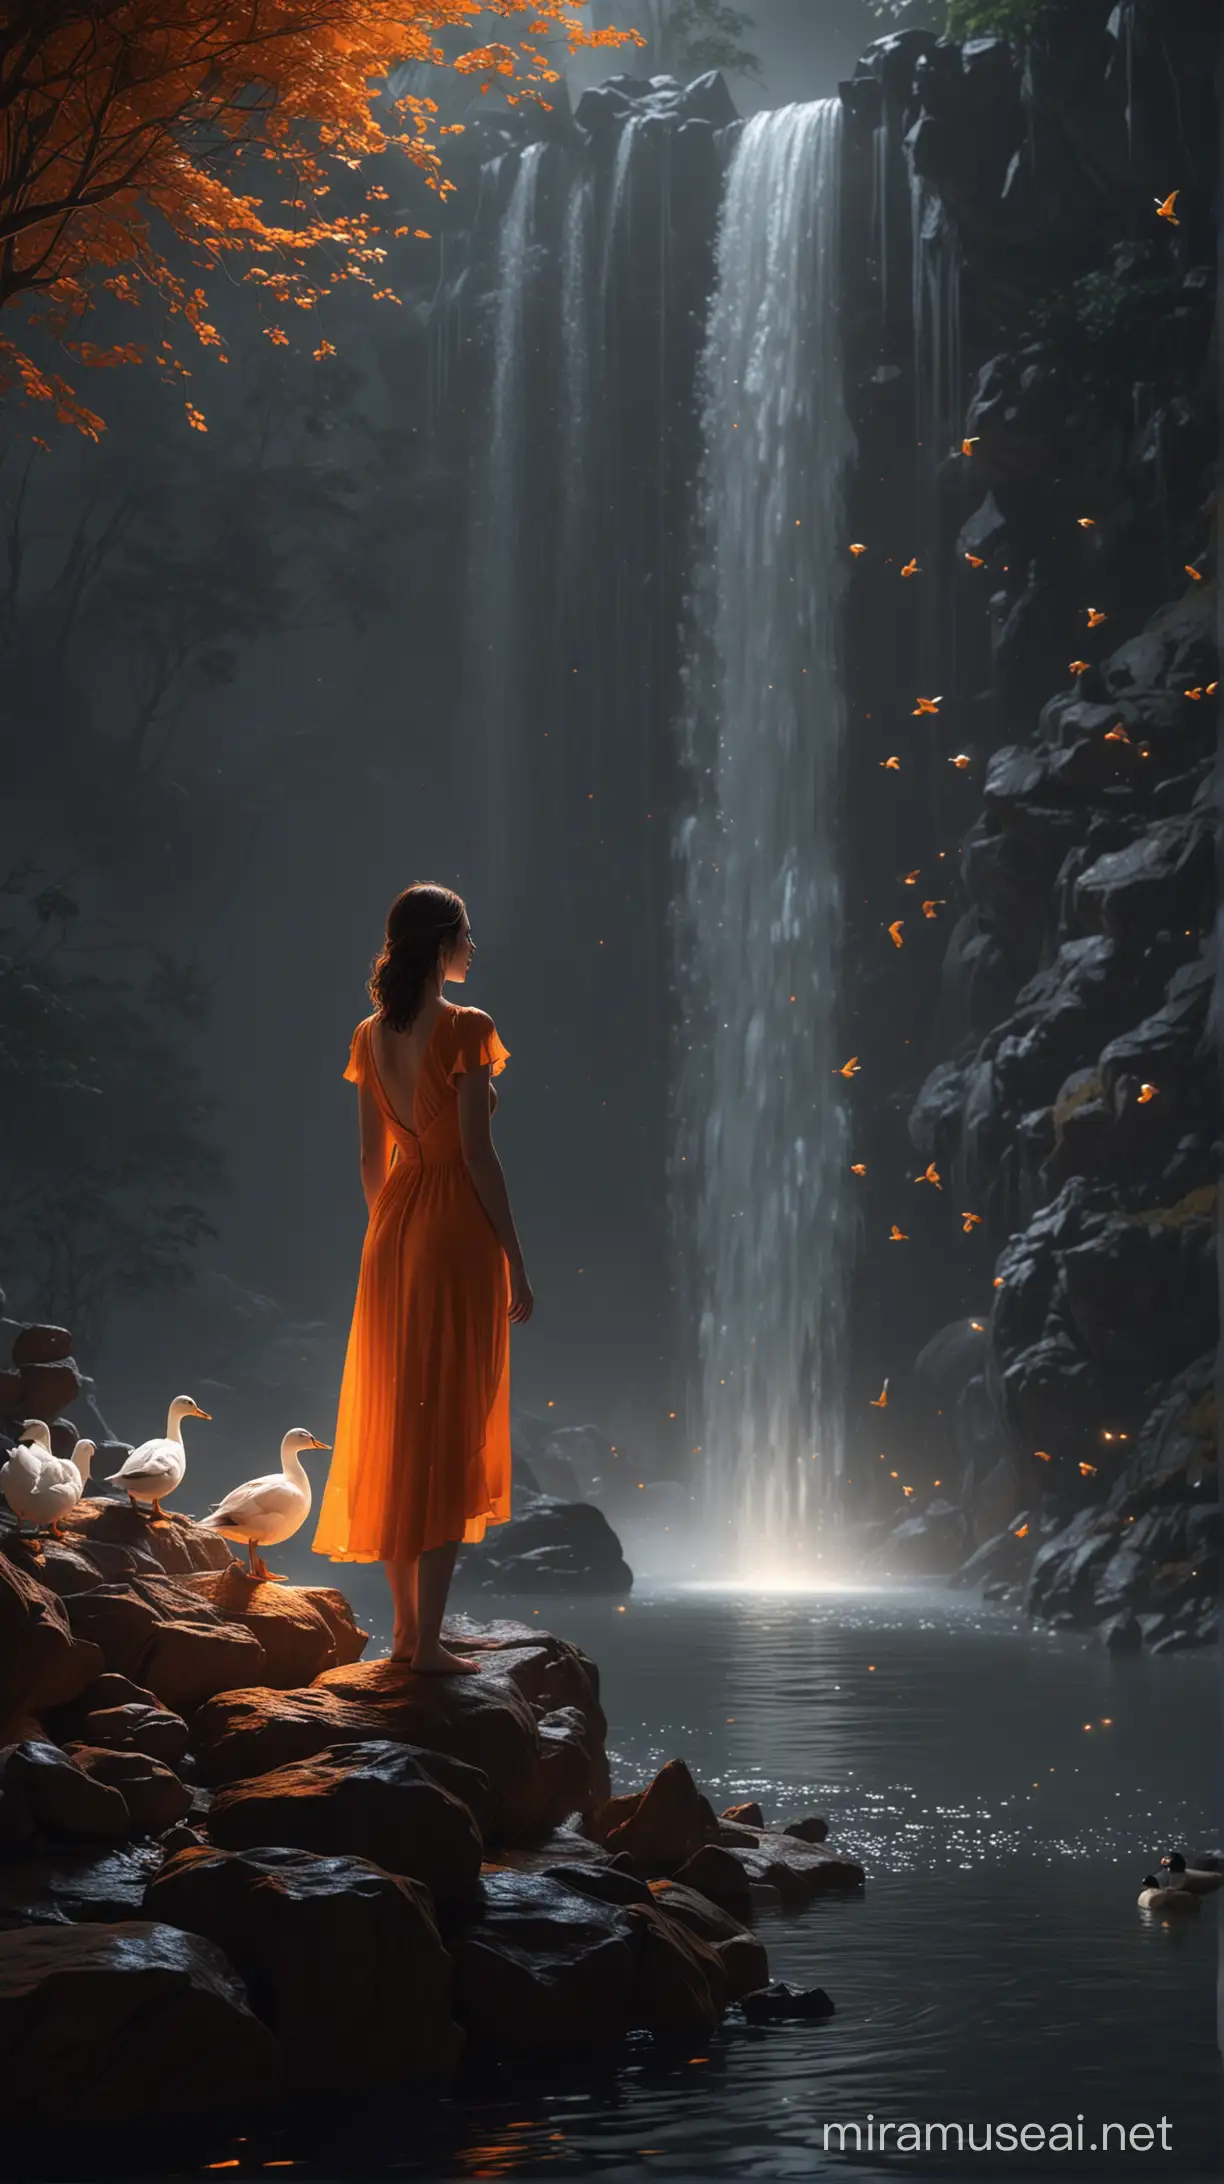 Stunning Waterfall Scene Woman in Orange Gown Basking in Moonlight with Glittering Ducks